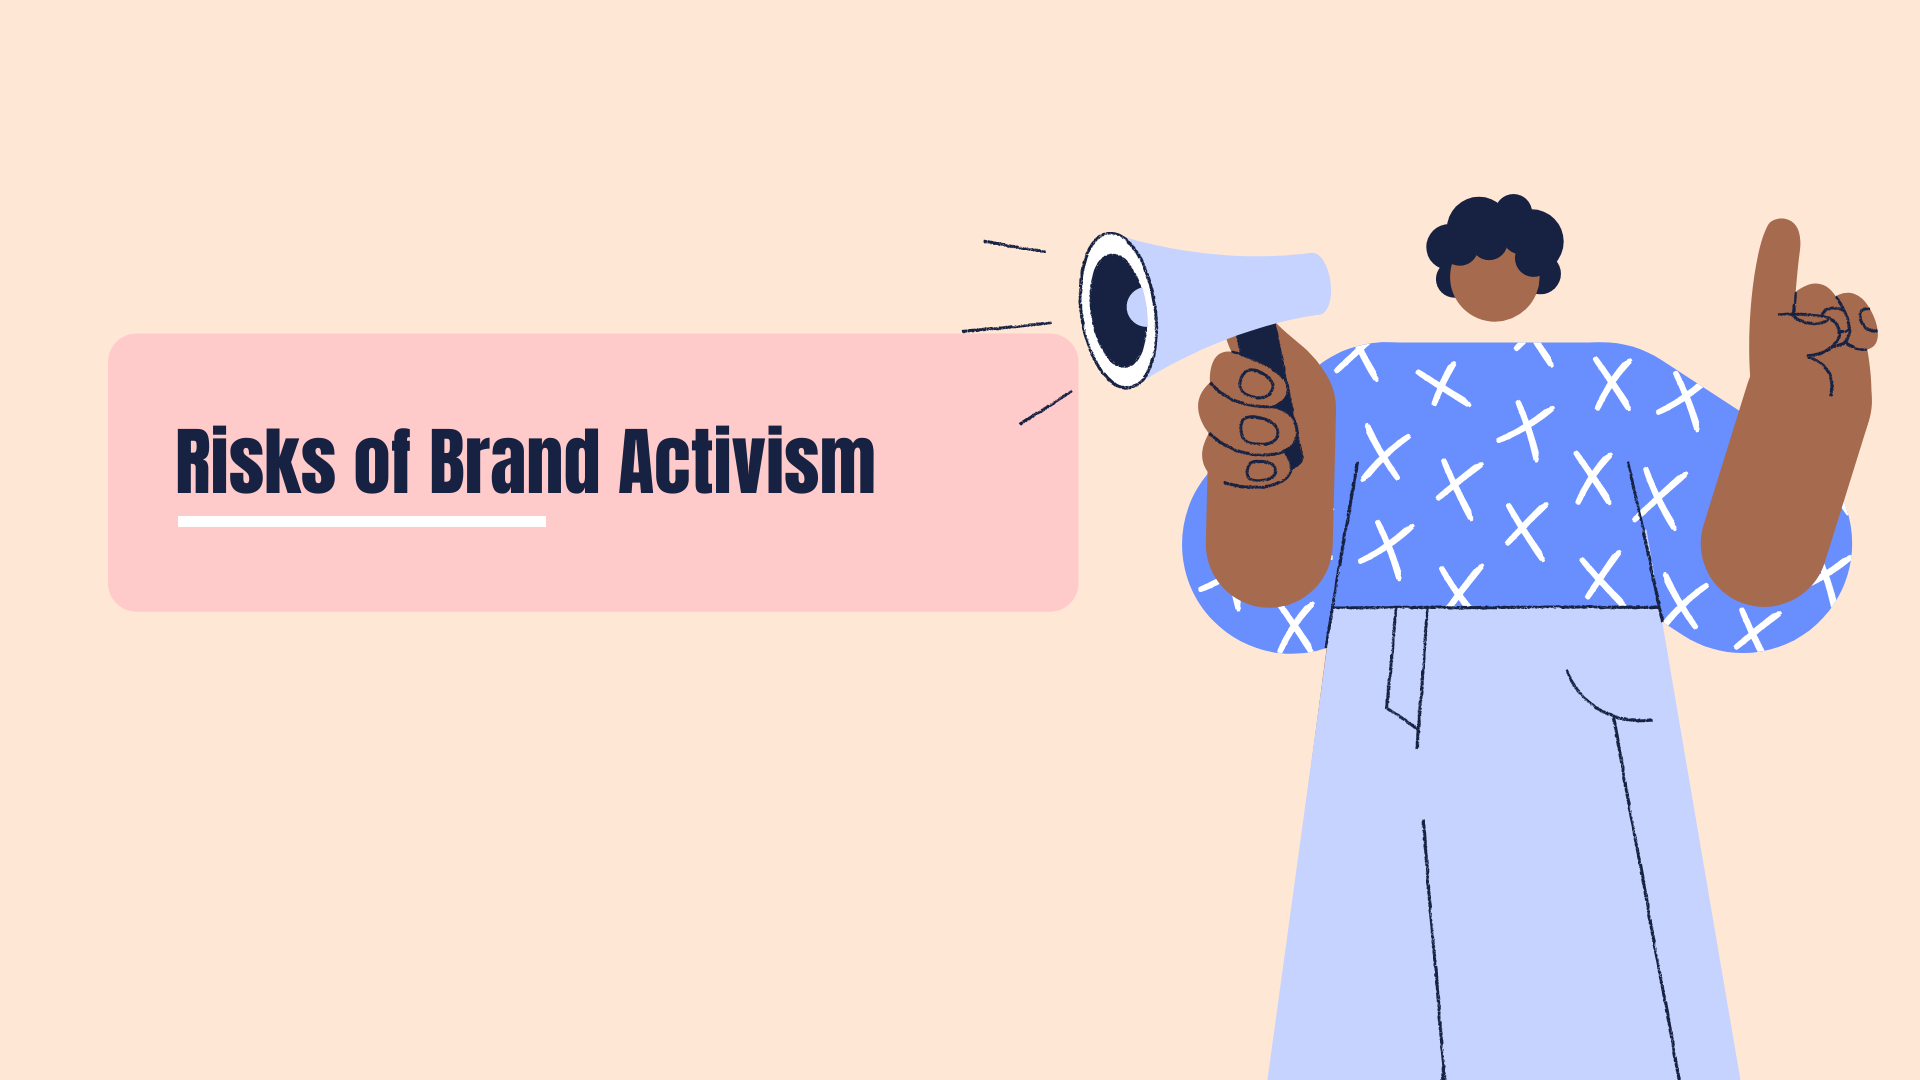 Risks of brand activism